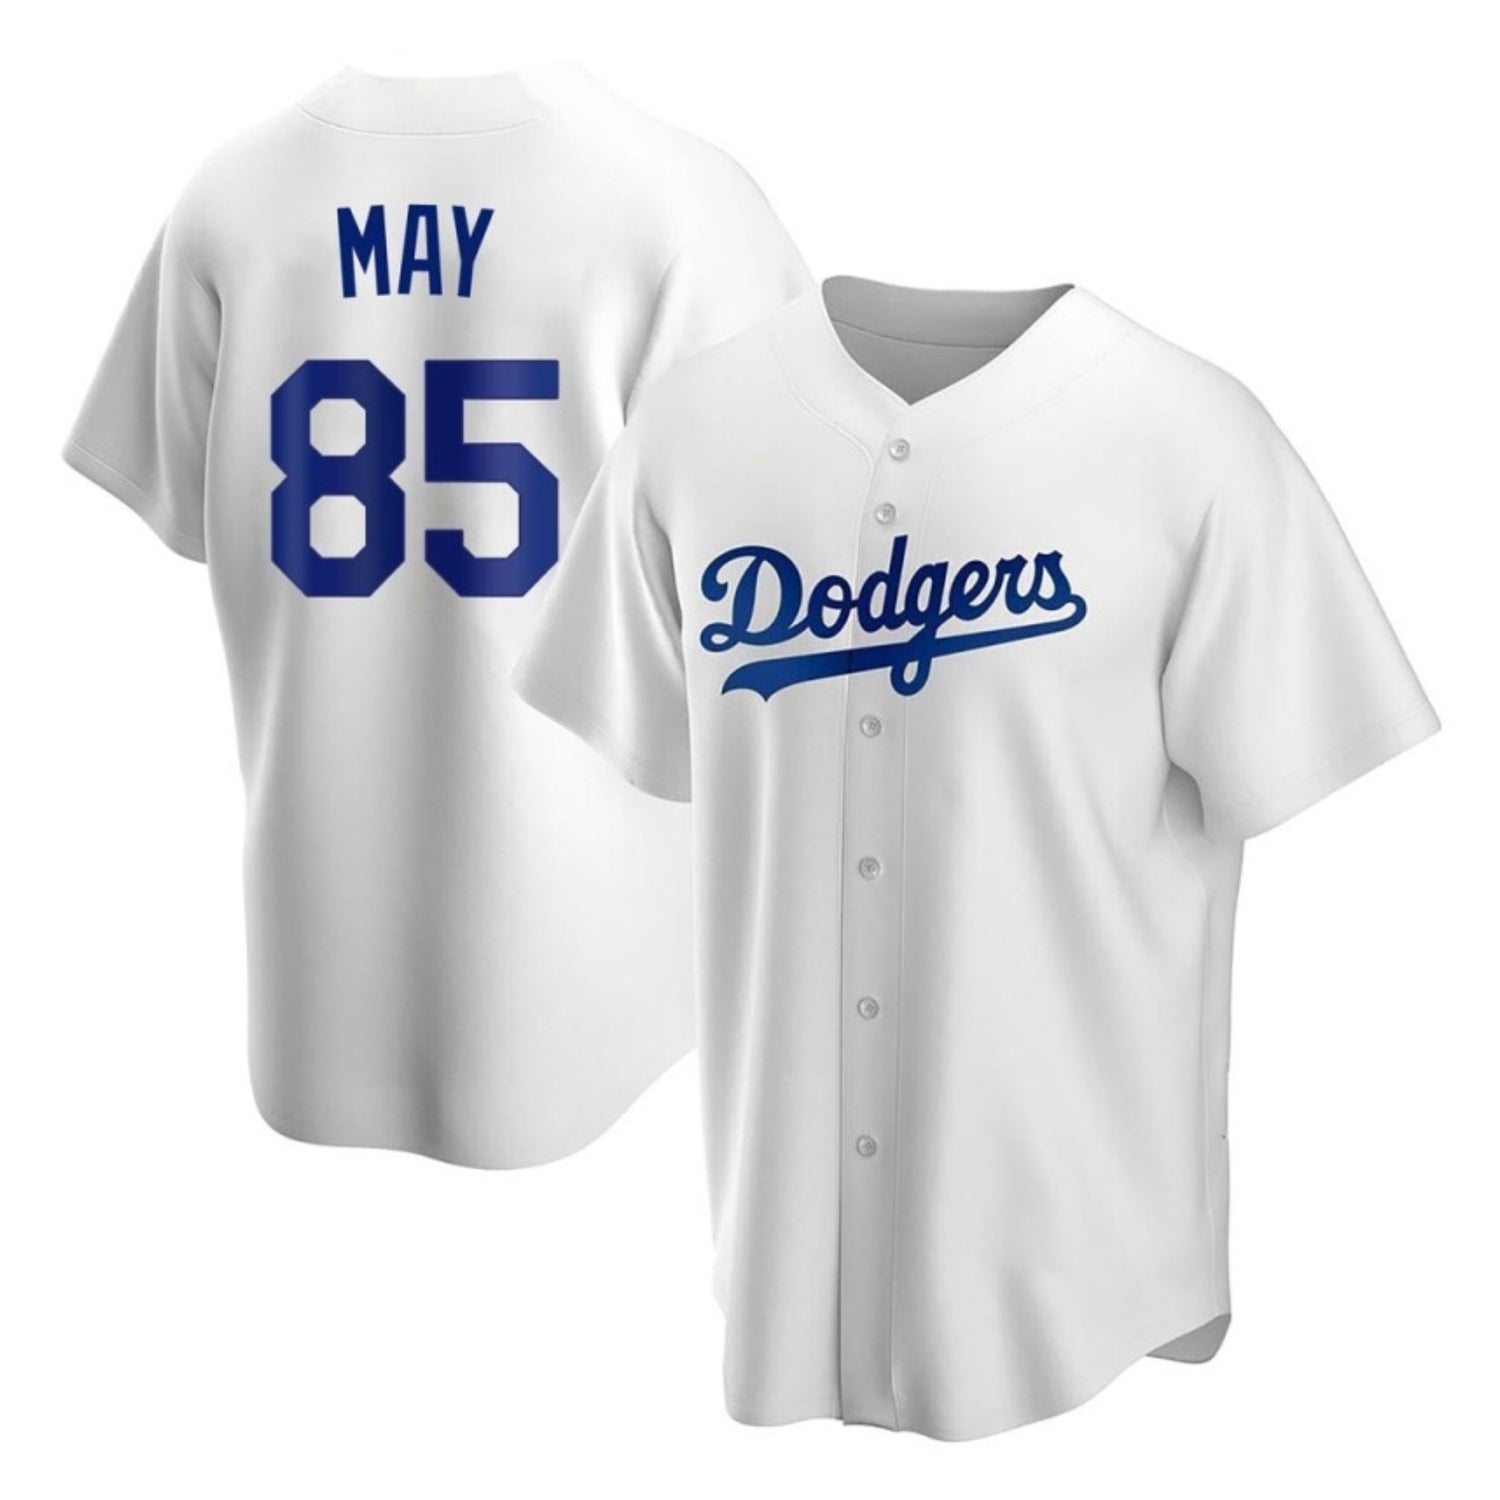 Matt Beaty #45 Los Angeles Dodgers gray Adult Size 48 Flex Base jersey